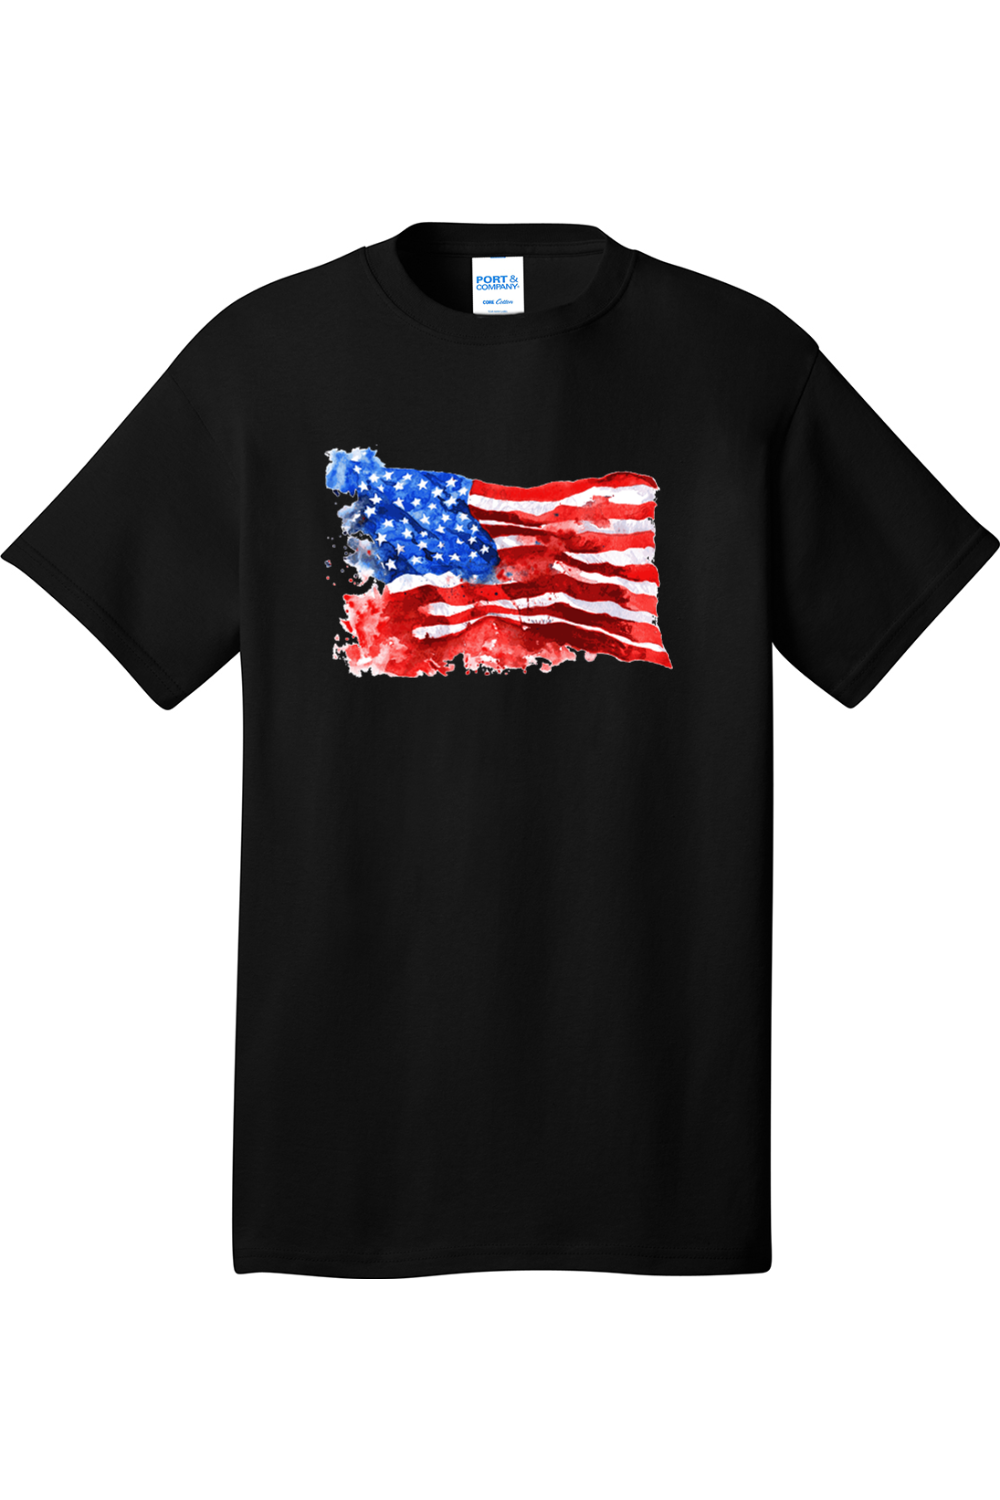 USA Flag Grunge | Mens Big and Tall Short Sleeve T-Shirt